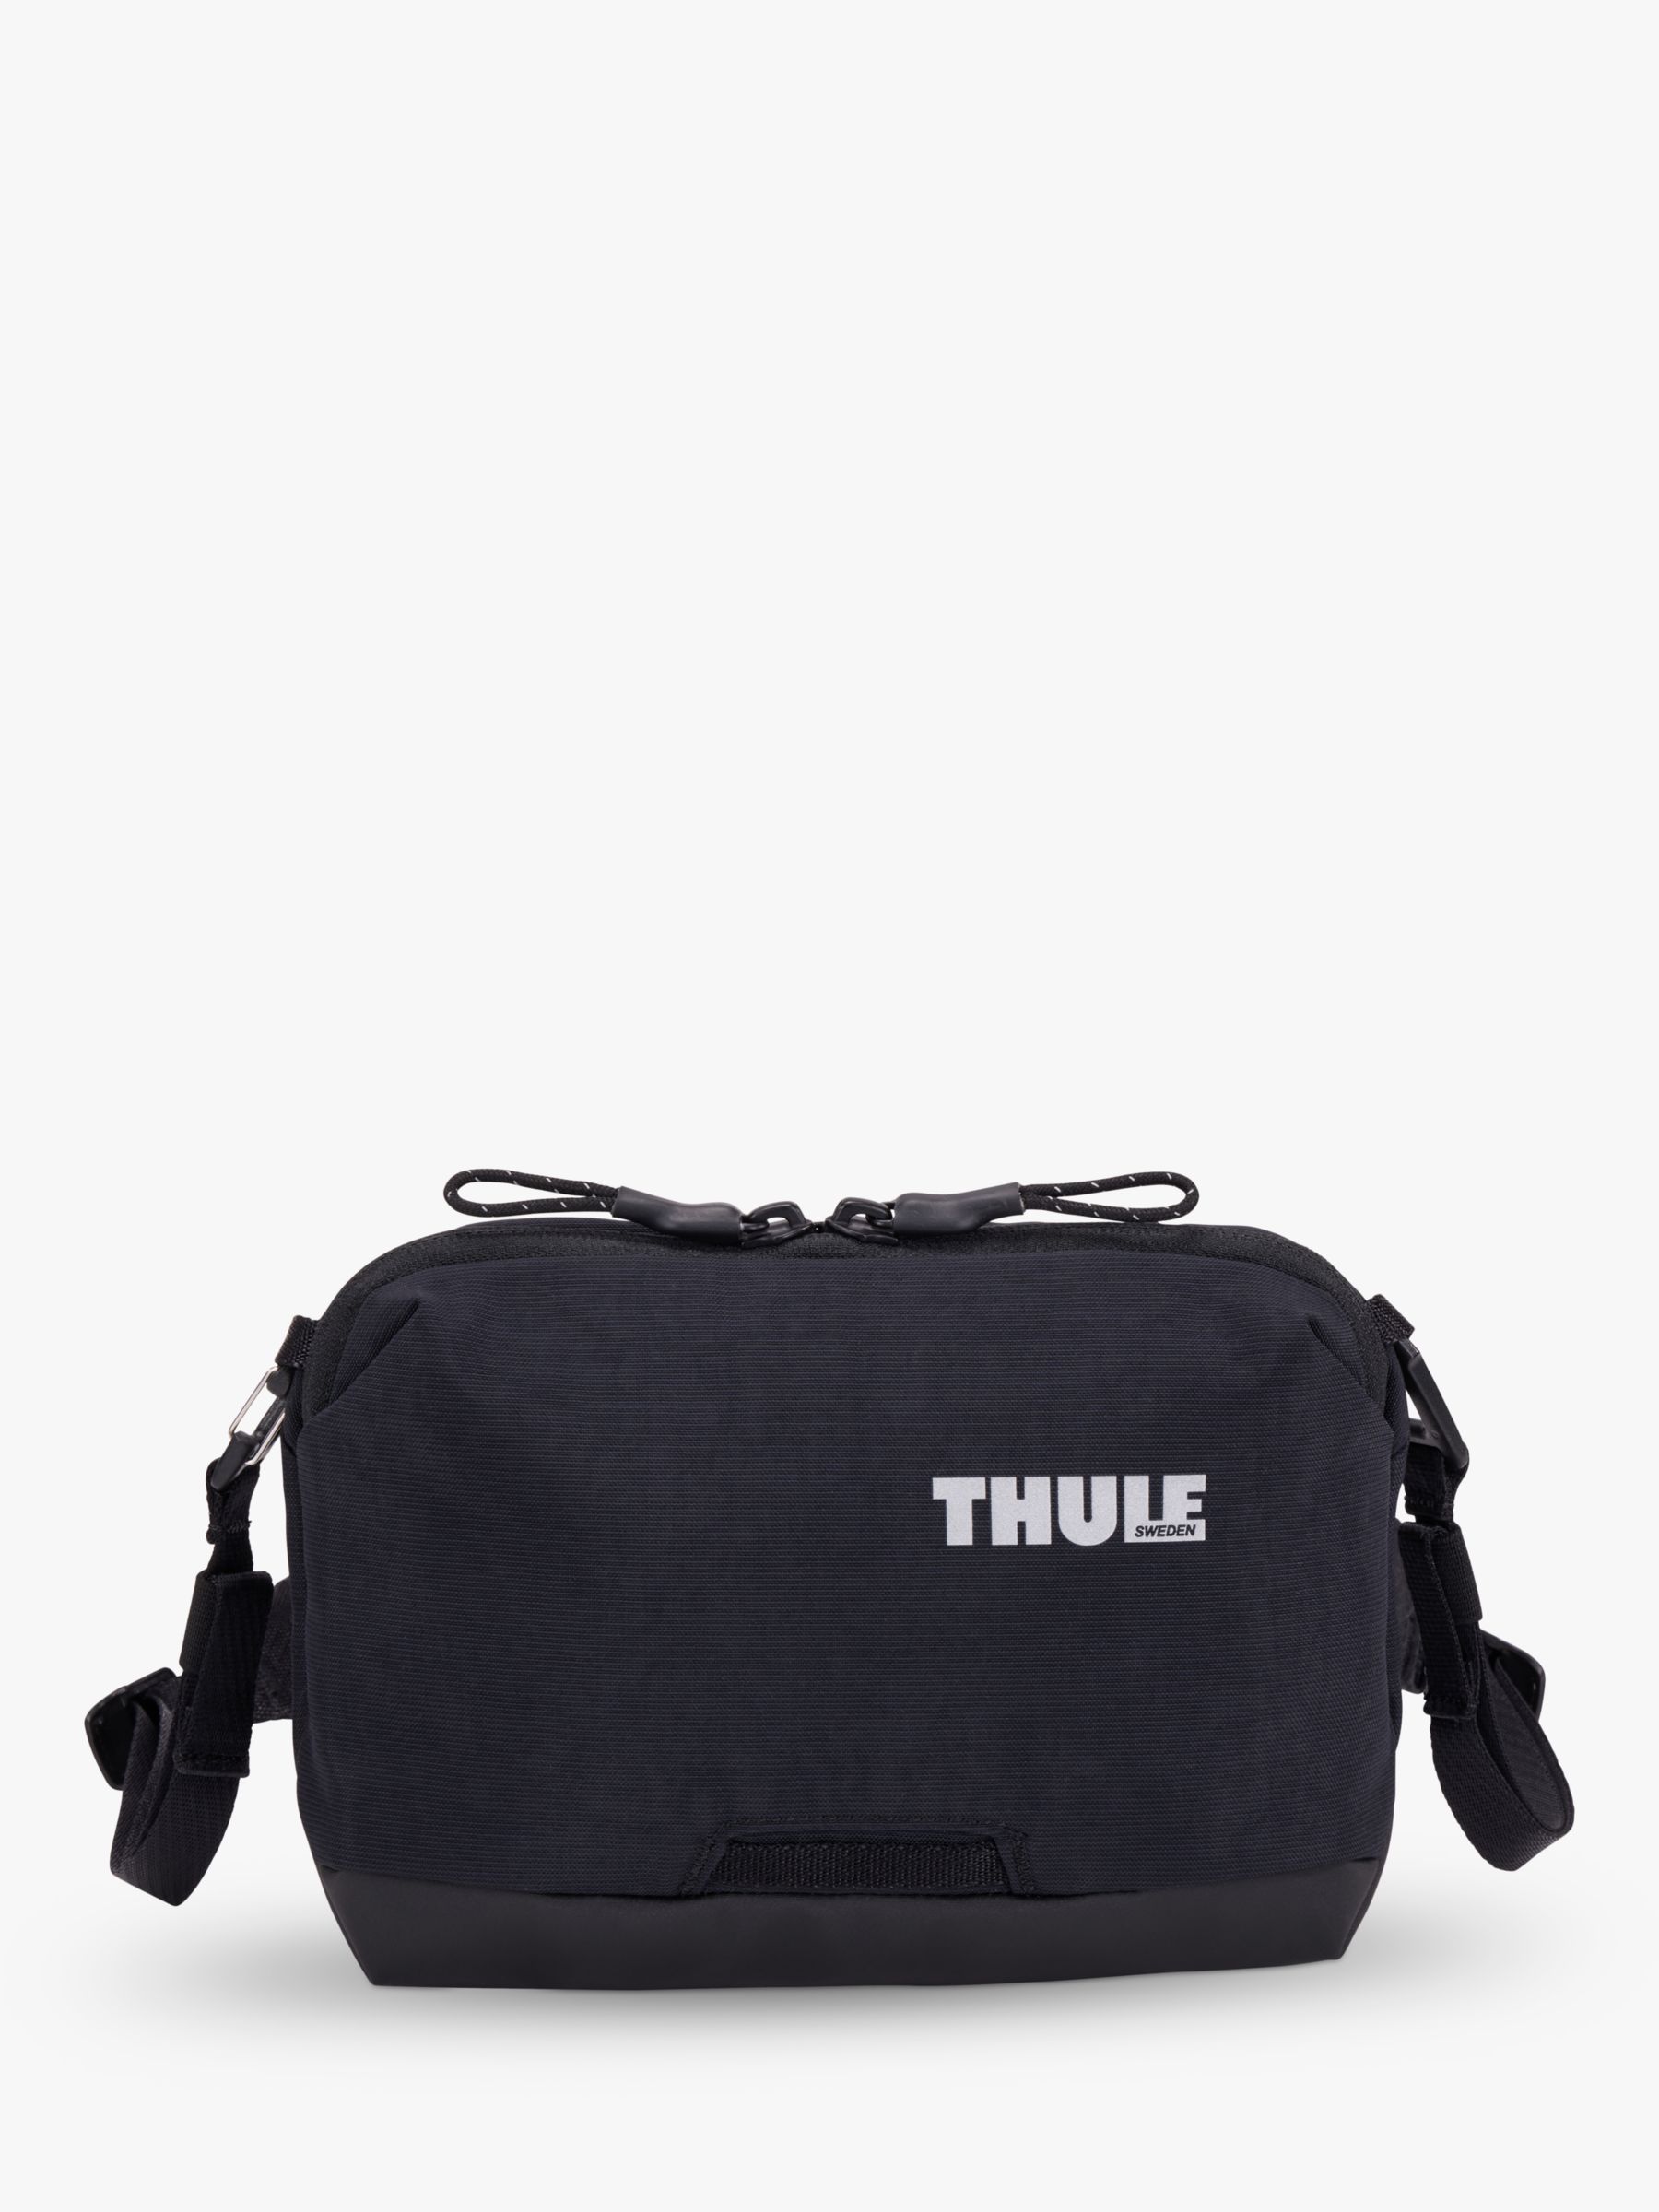 Thule Paramount 2L Cross Body Bag, Black at John Lewis & Partners